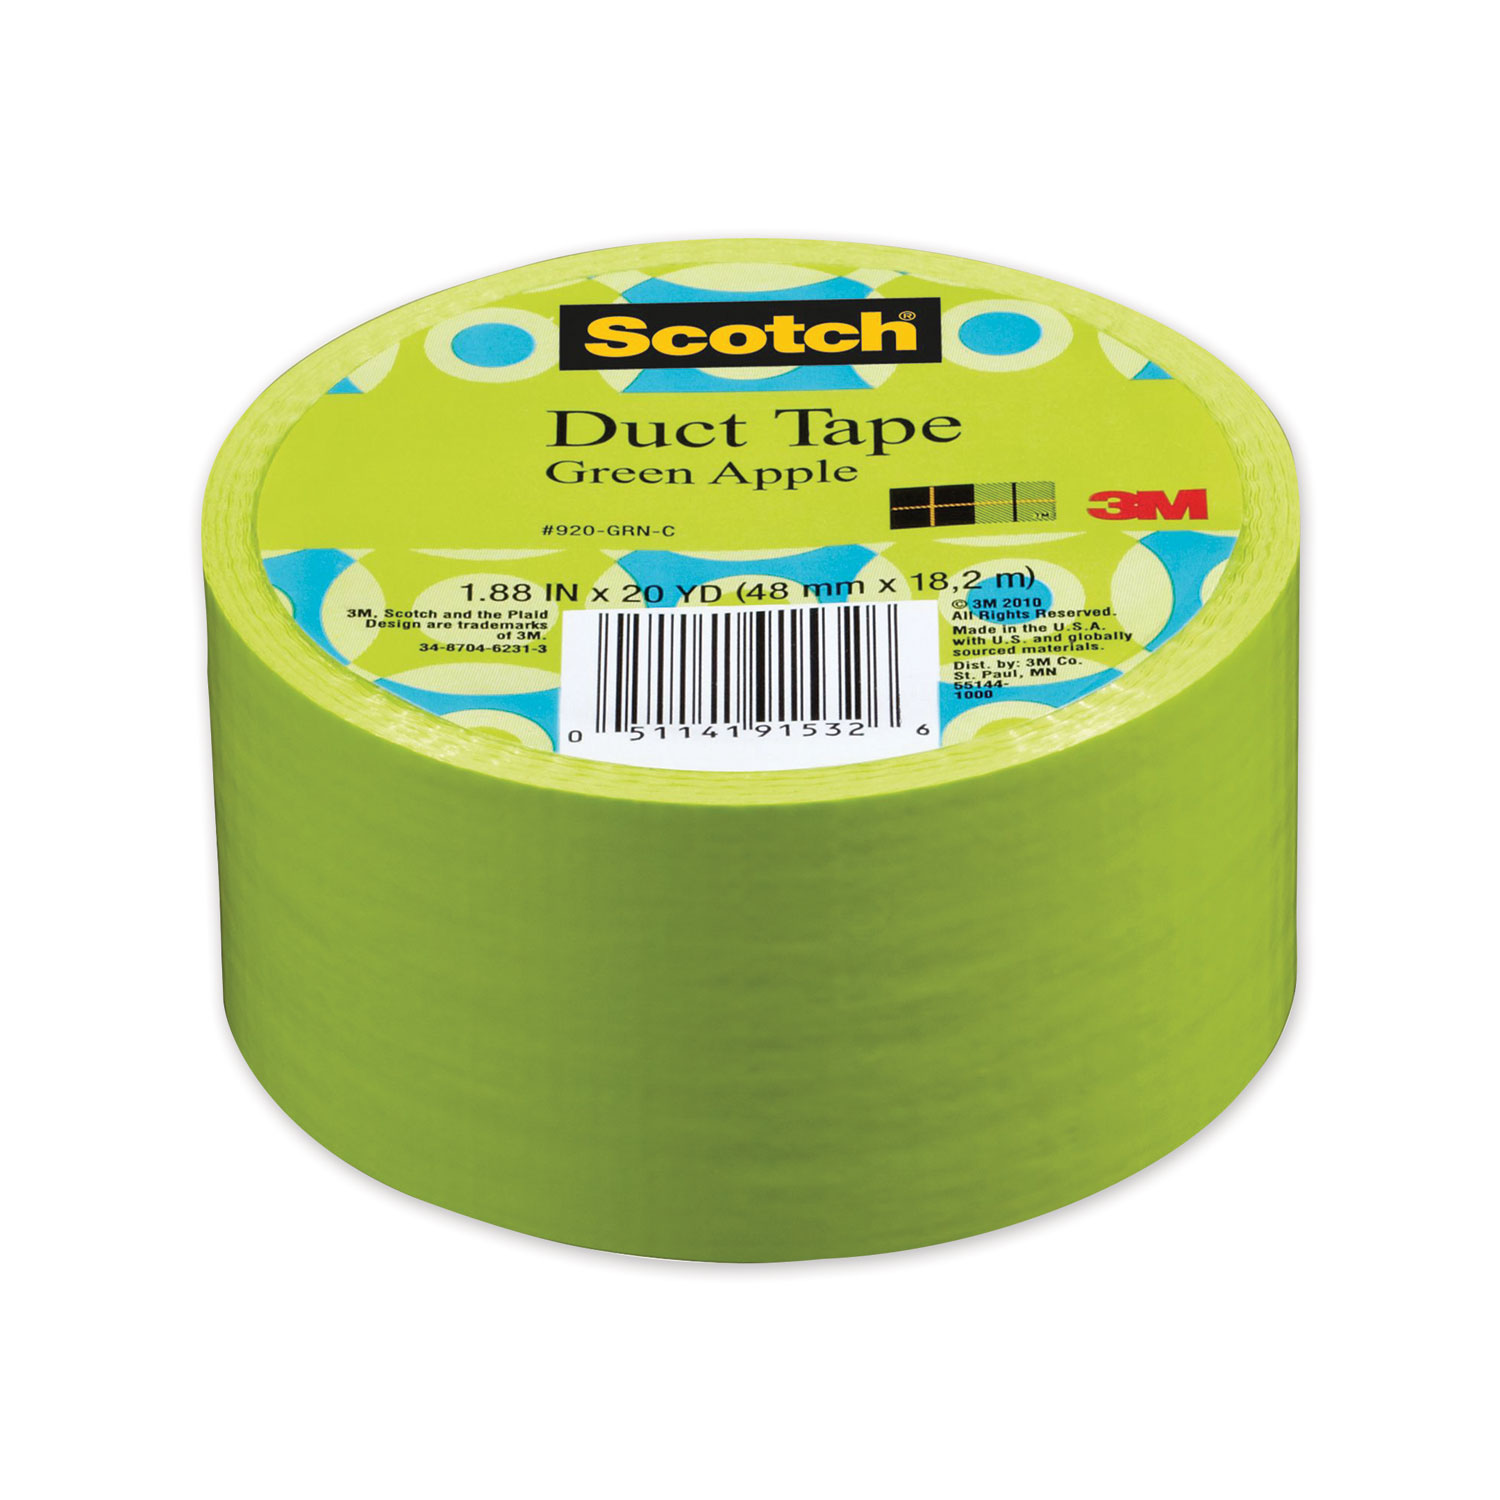  Scotch 920-GRN-C Duct Tape, 1.88 x 20 yds, Green Apple (MMM70005059269) 